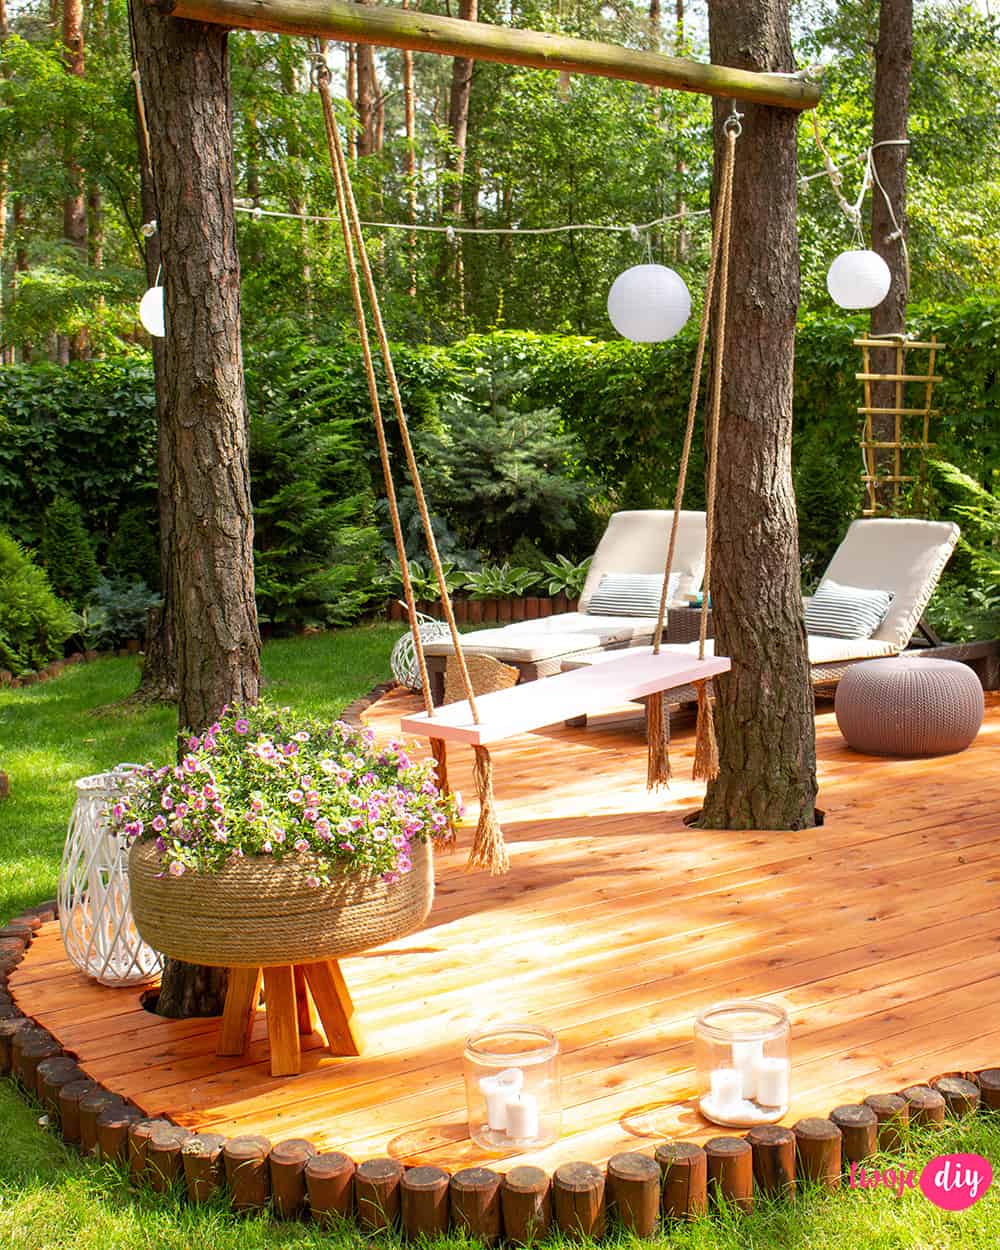 sun-deck-in-a-forest-garden